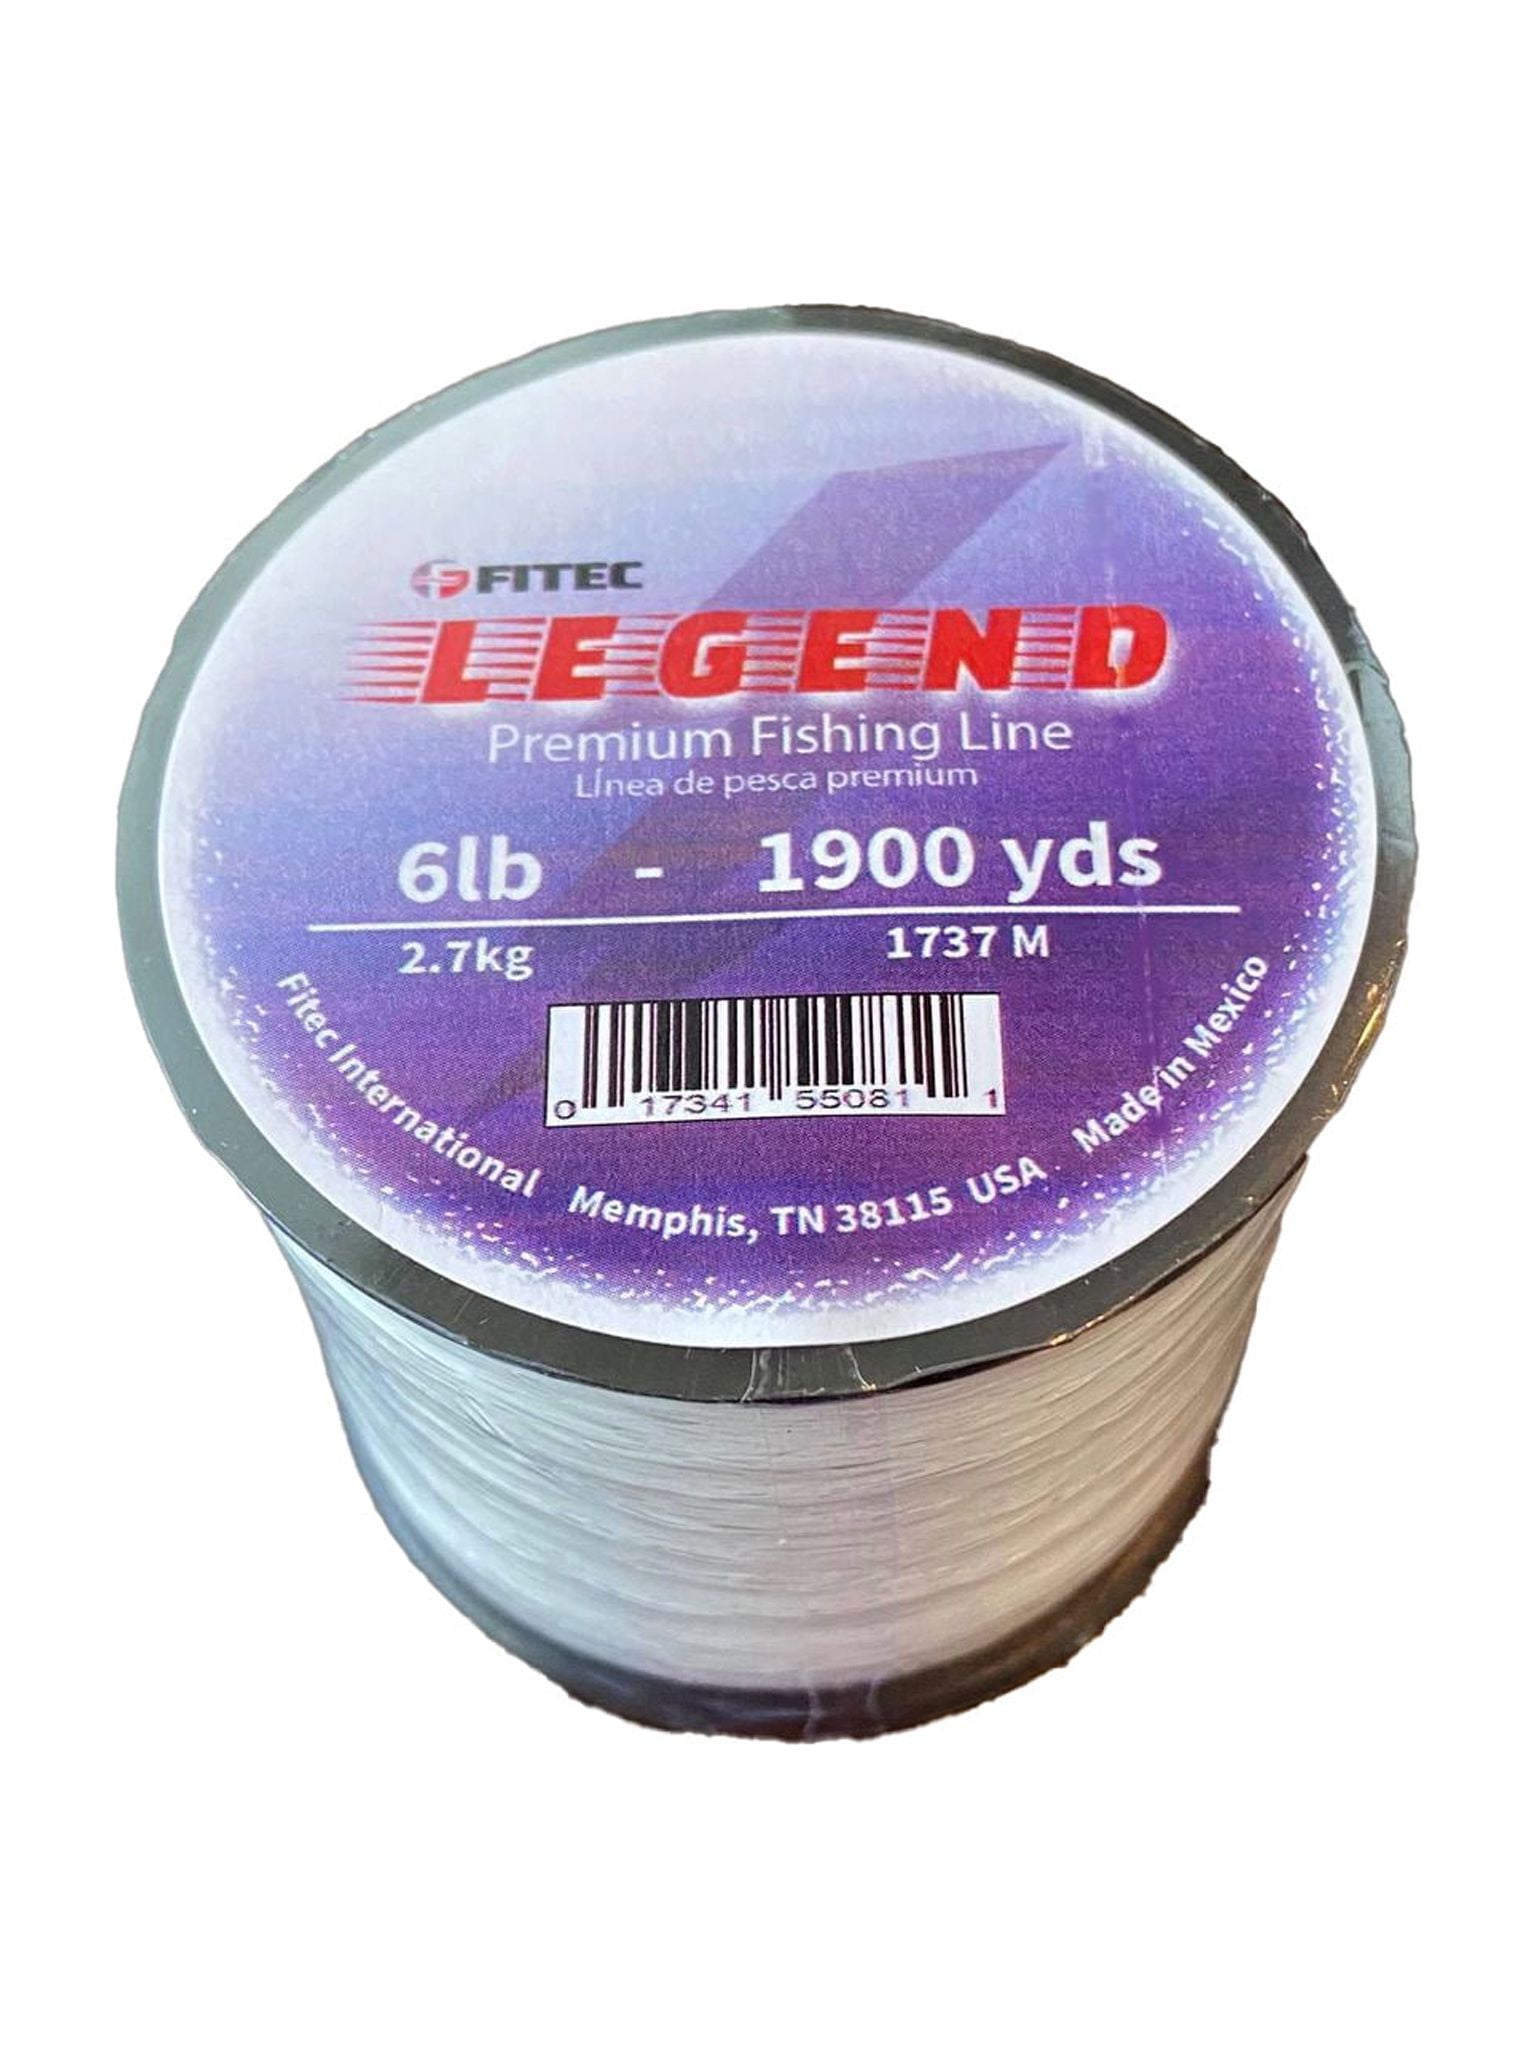 Legend 6 lb. Monofilament Premium Fishing Line, Clear, 1900 yd.